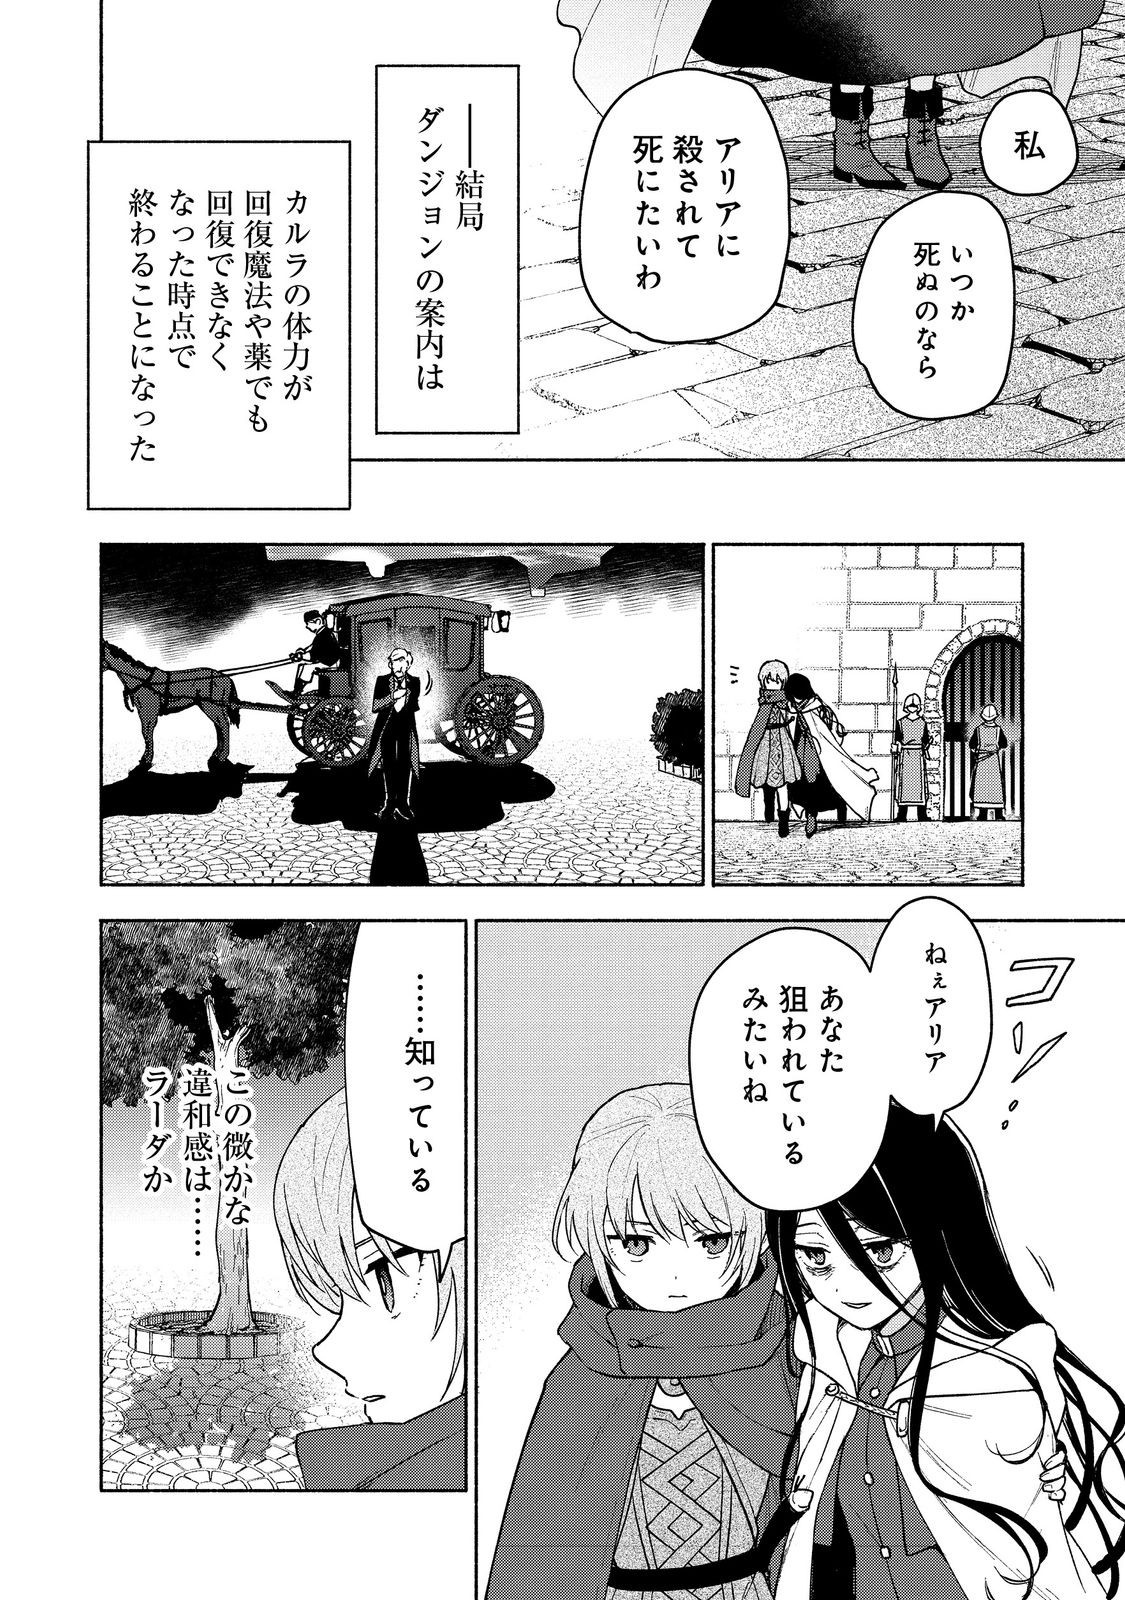 Otome Game no Heroine de Saikyou Survival - Chapter 23 - Page 18